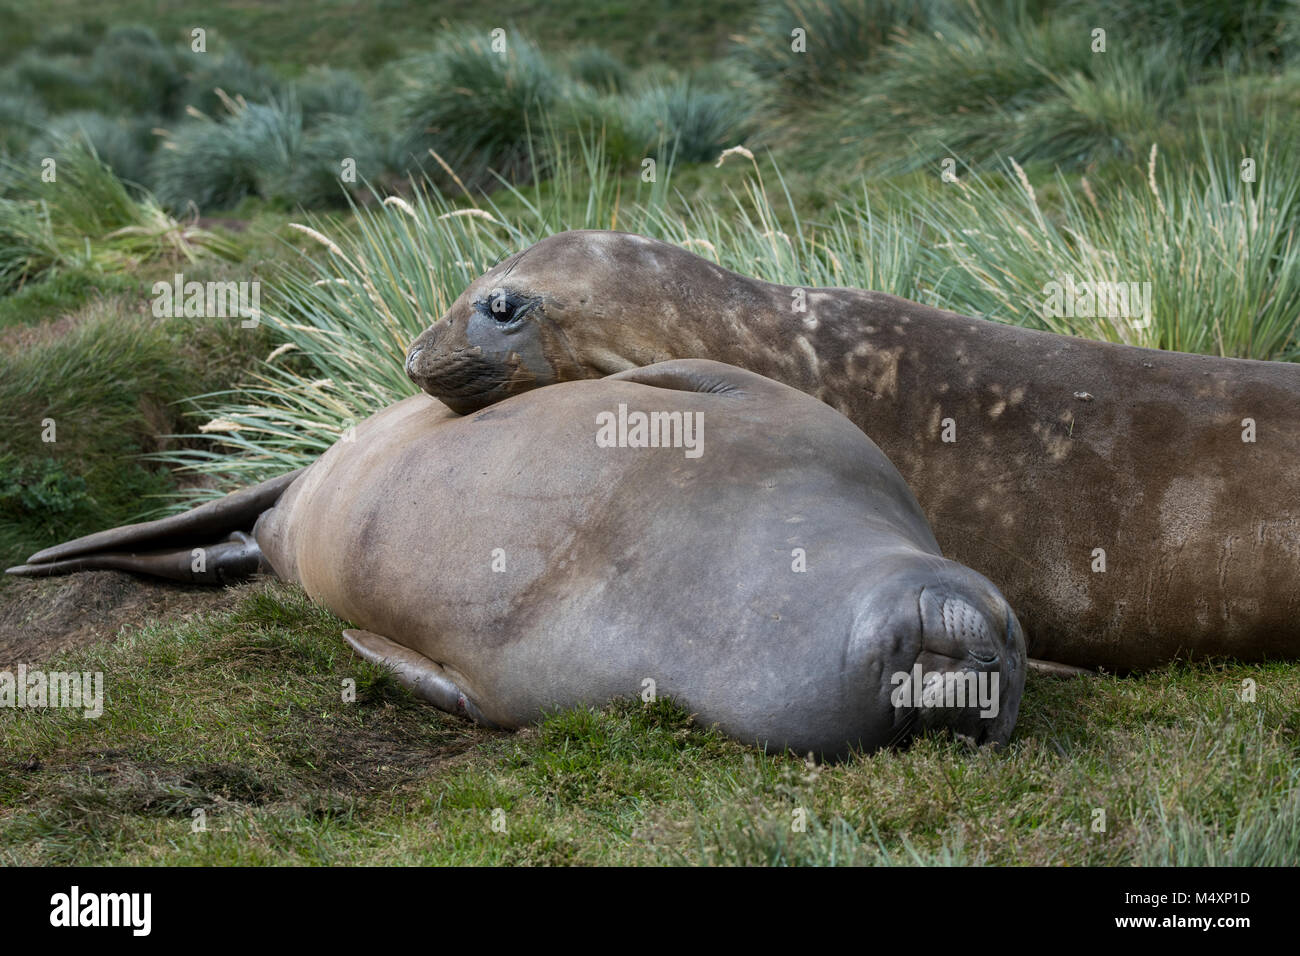 British territory, South Georgia. Historic whaling settlement of Grytviken. Female Southern elephant seals (Wild: Mirounga leonina) in tussock grass h Stock Photo